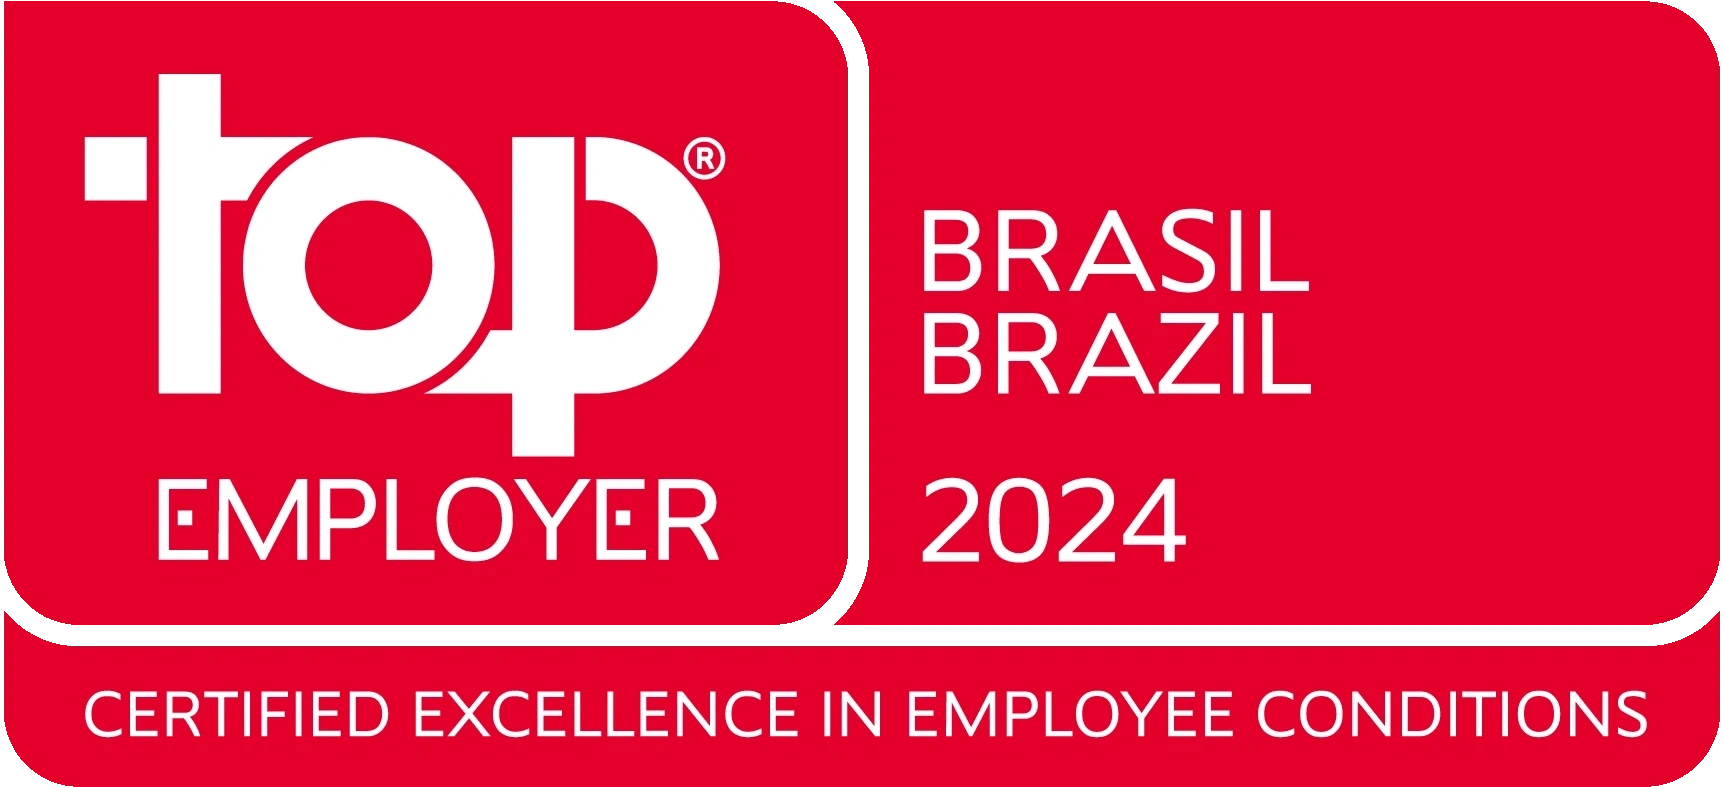 Top Employer in Brazil